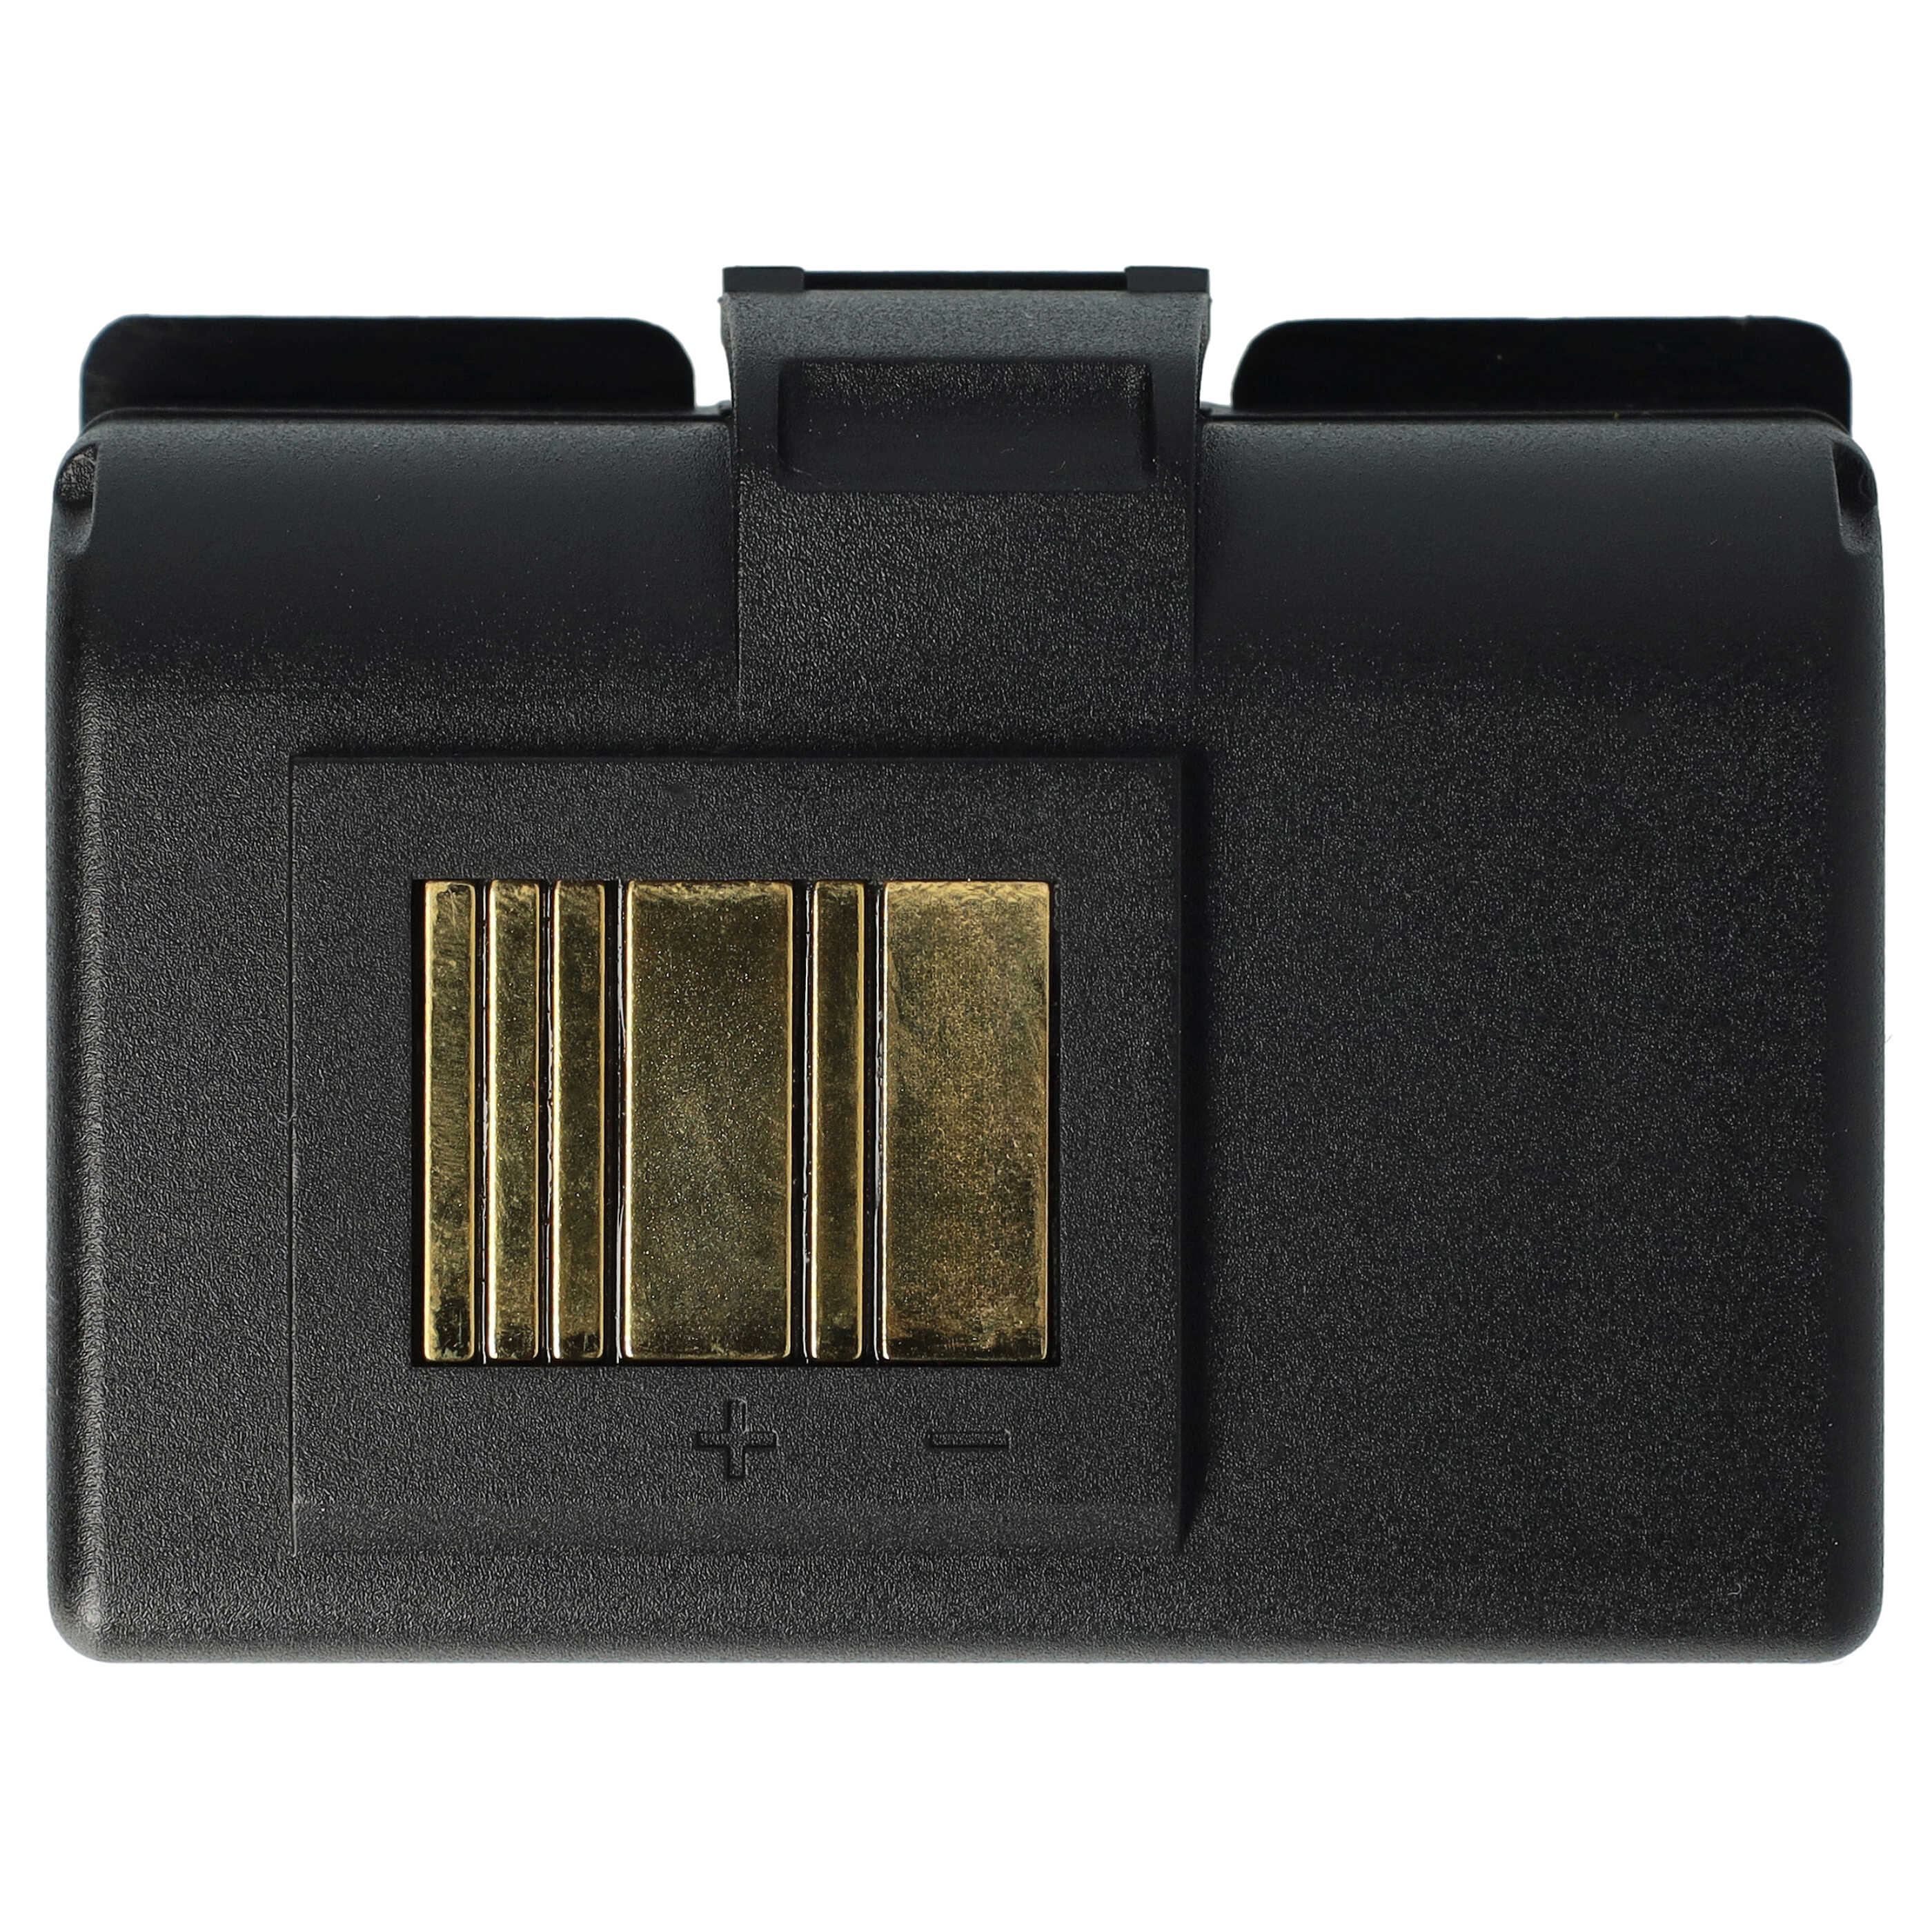 Batteria per stampante sostituisce Zebra AT16004, BTRY-MPP-34MA1-01 Zebra - 5200mAh 7,4V Li-Ion